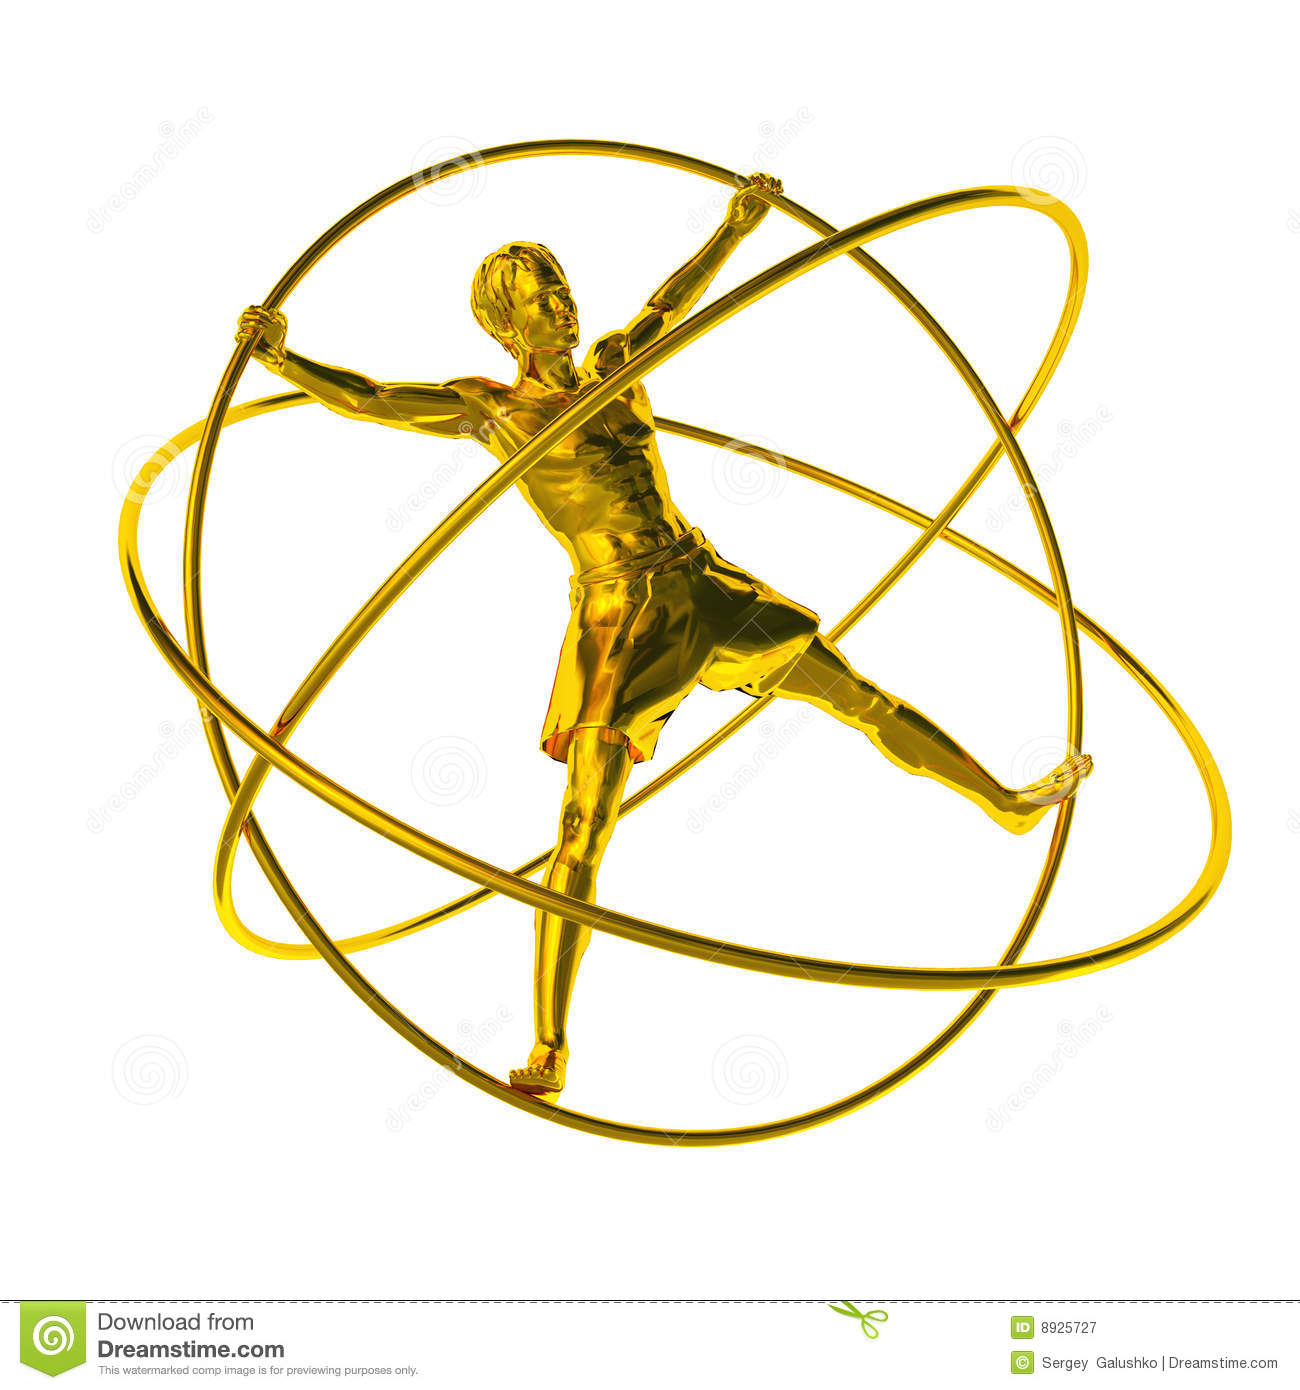 man-simulator-gyroscope-gold-8925727.jpg